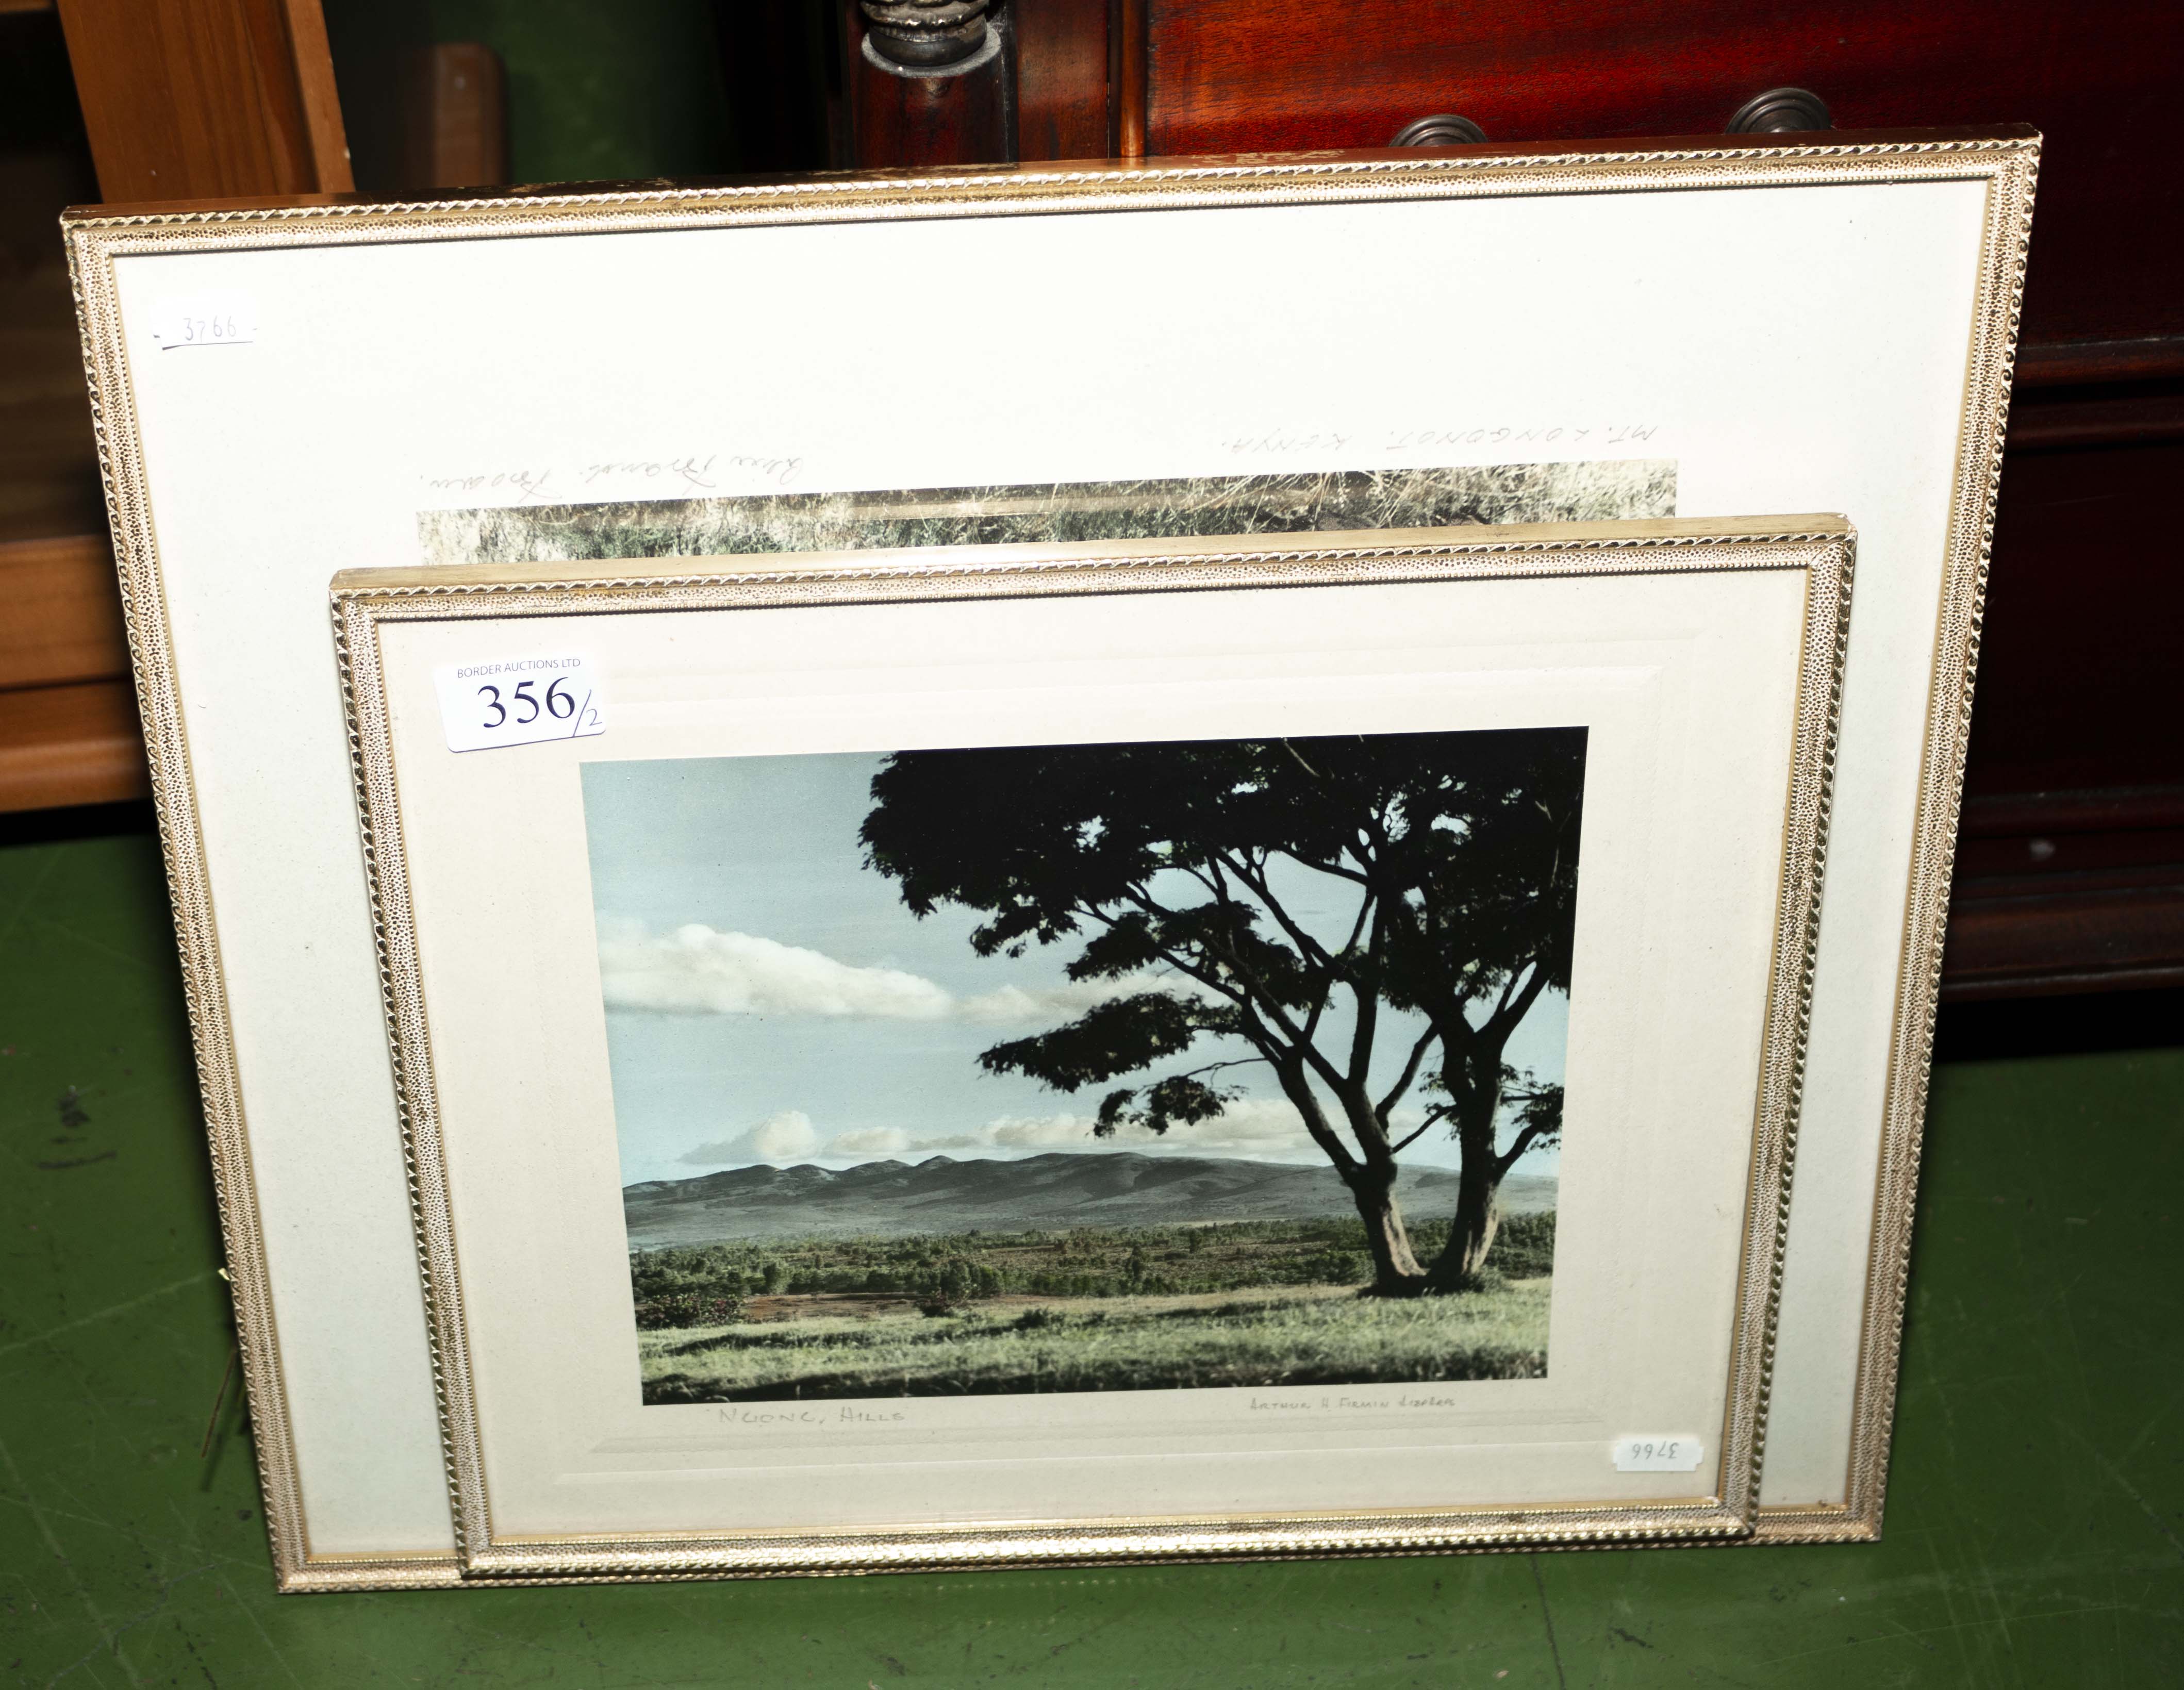 Two framed photographs